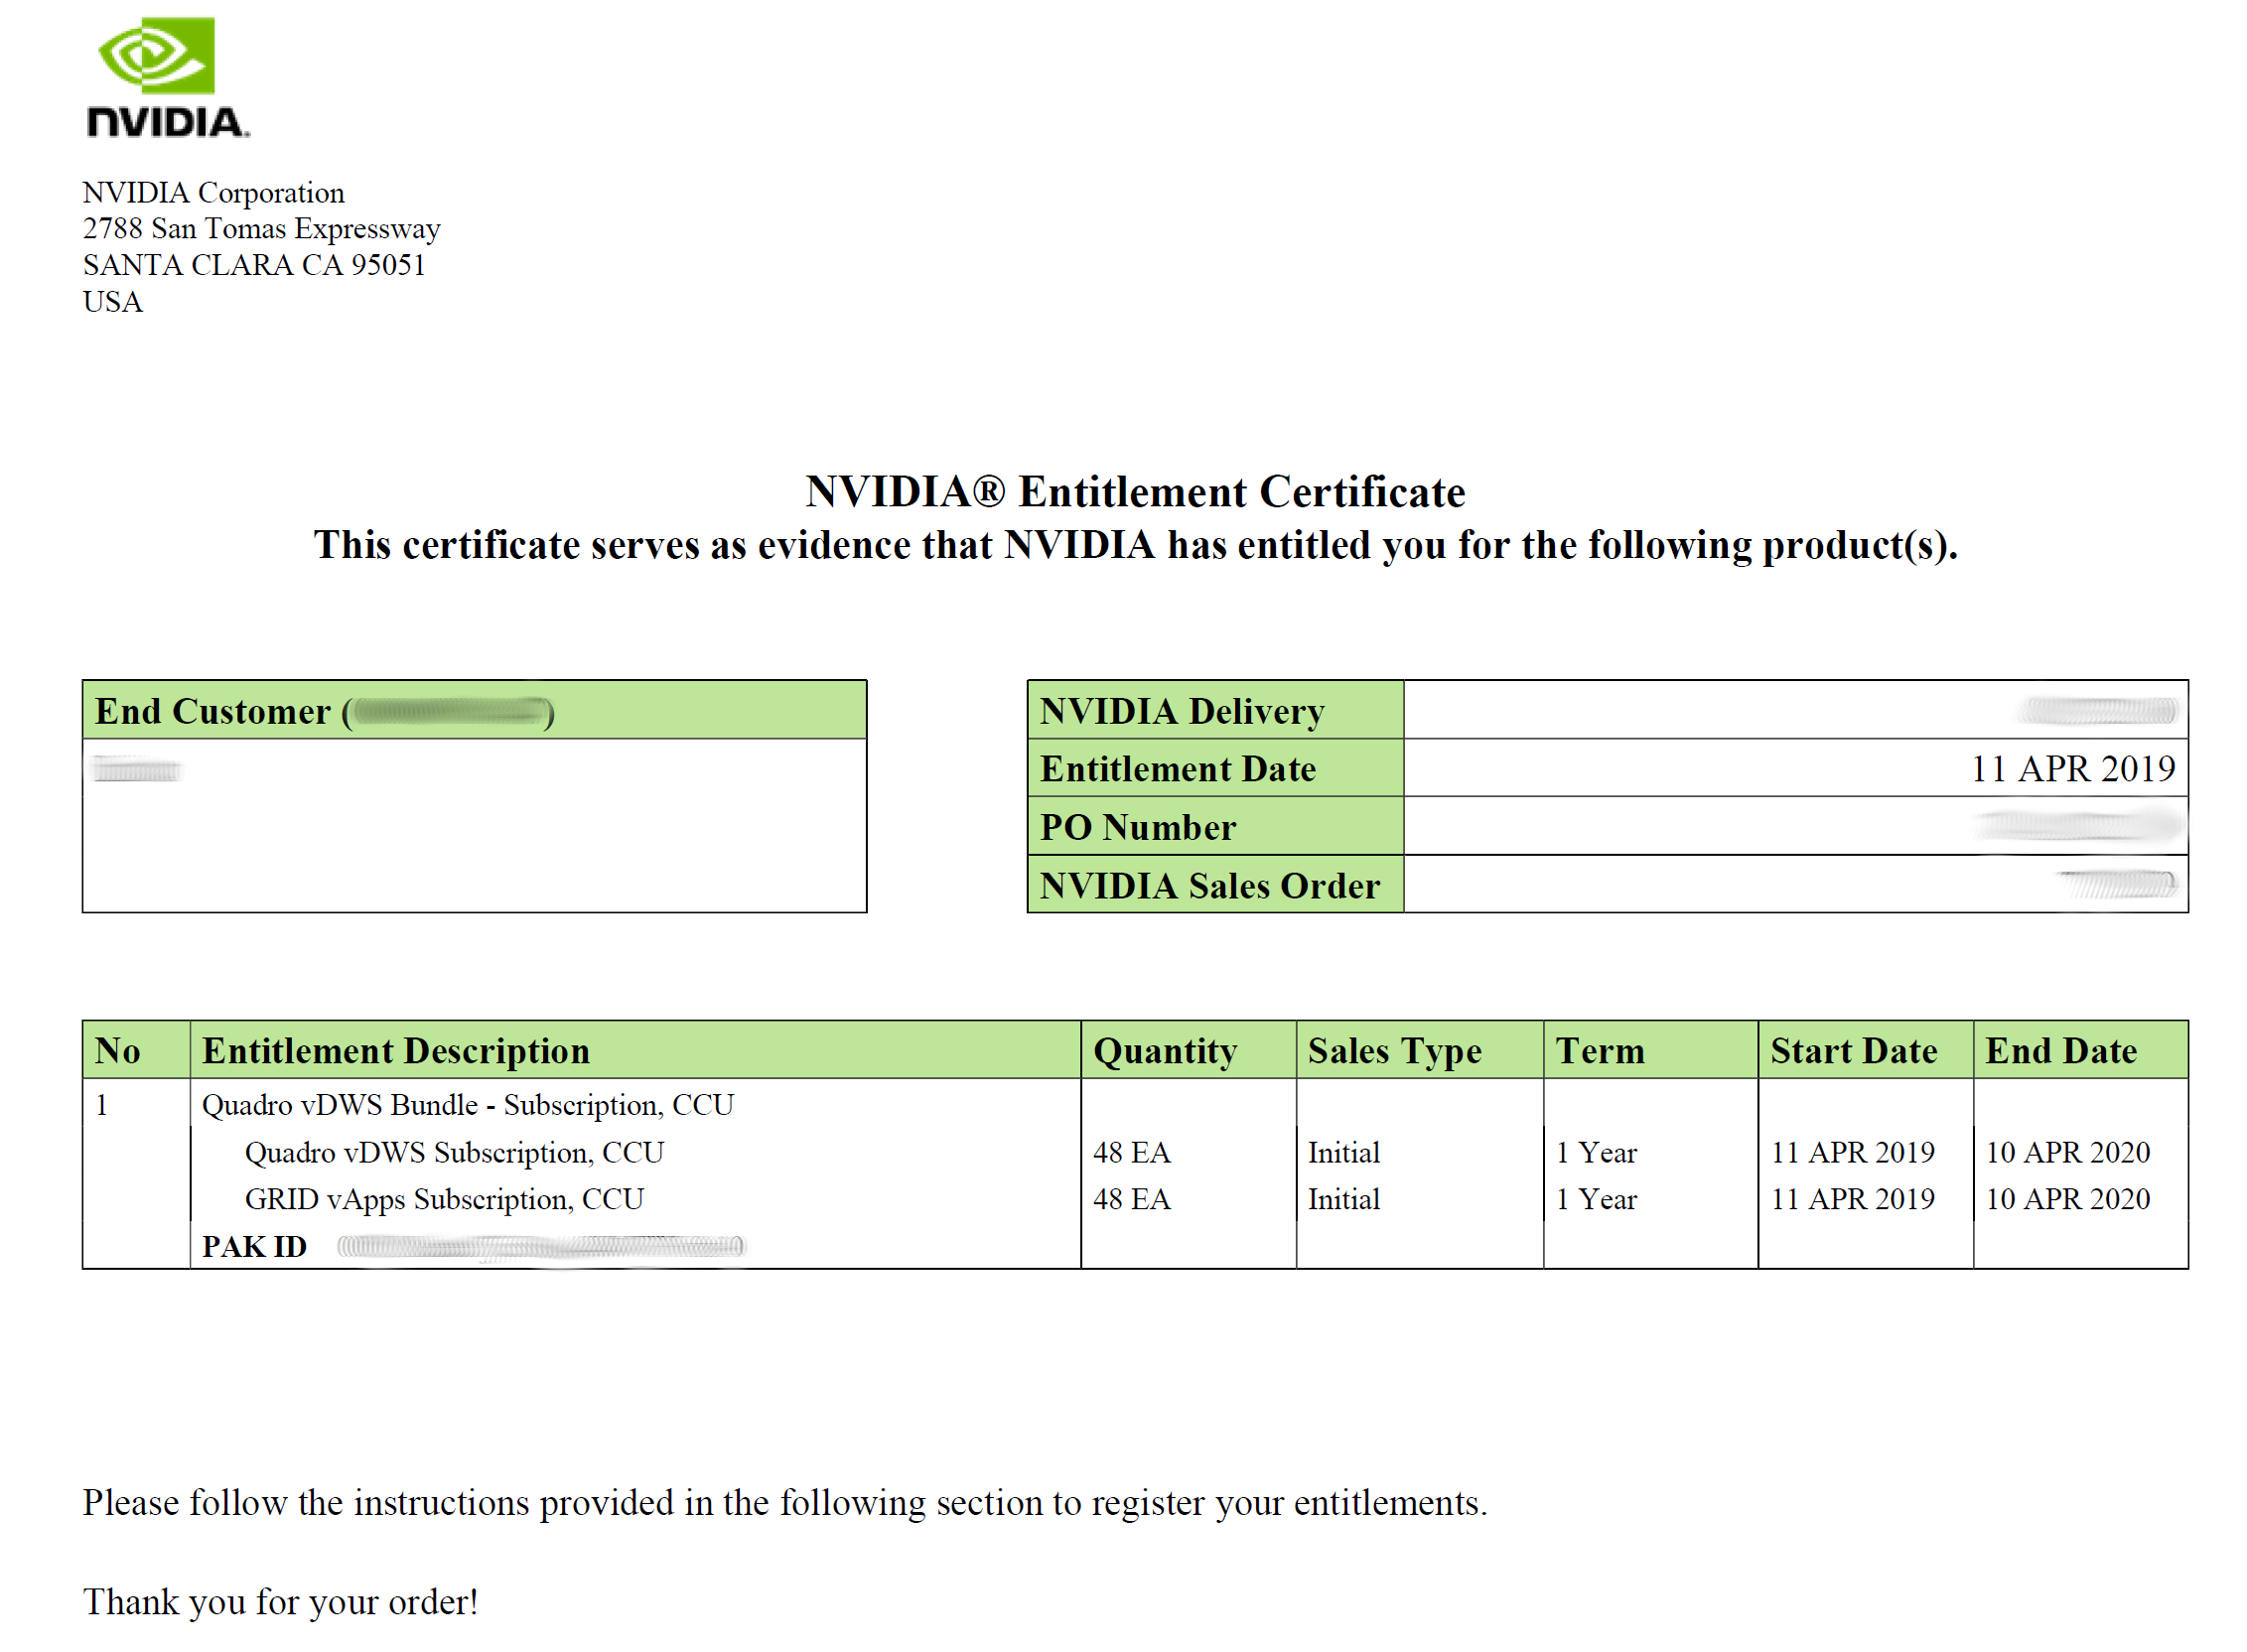 Screen capture showing an NVIDIA Entitlement Certificate